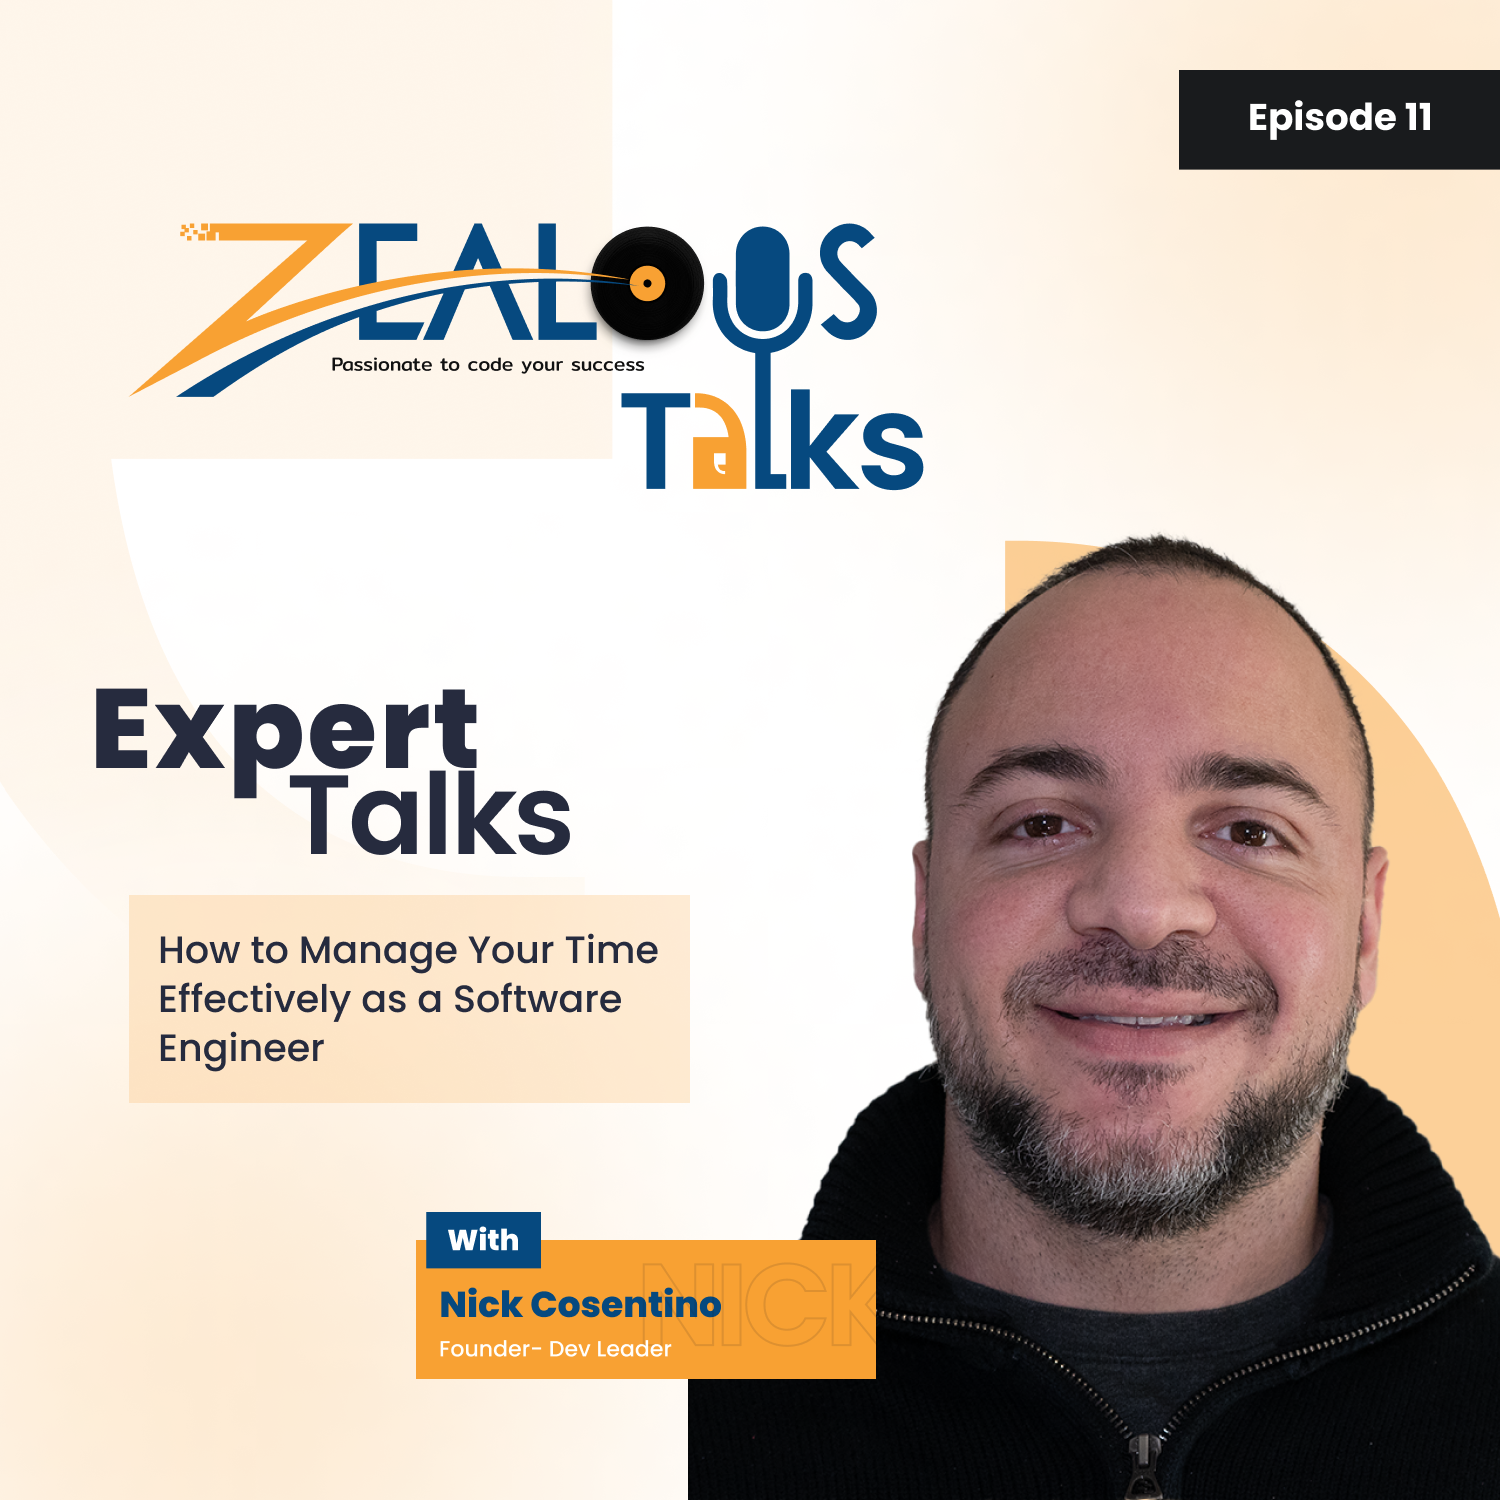 Expert talks Nick Podcast with Zealous Talk